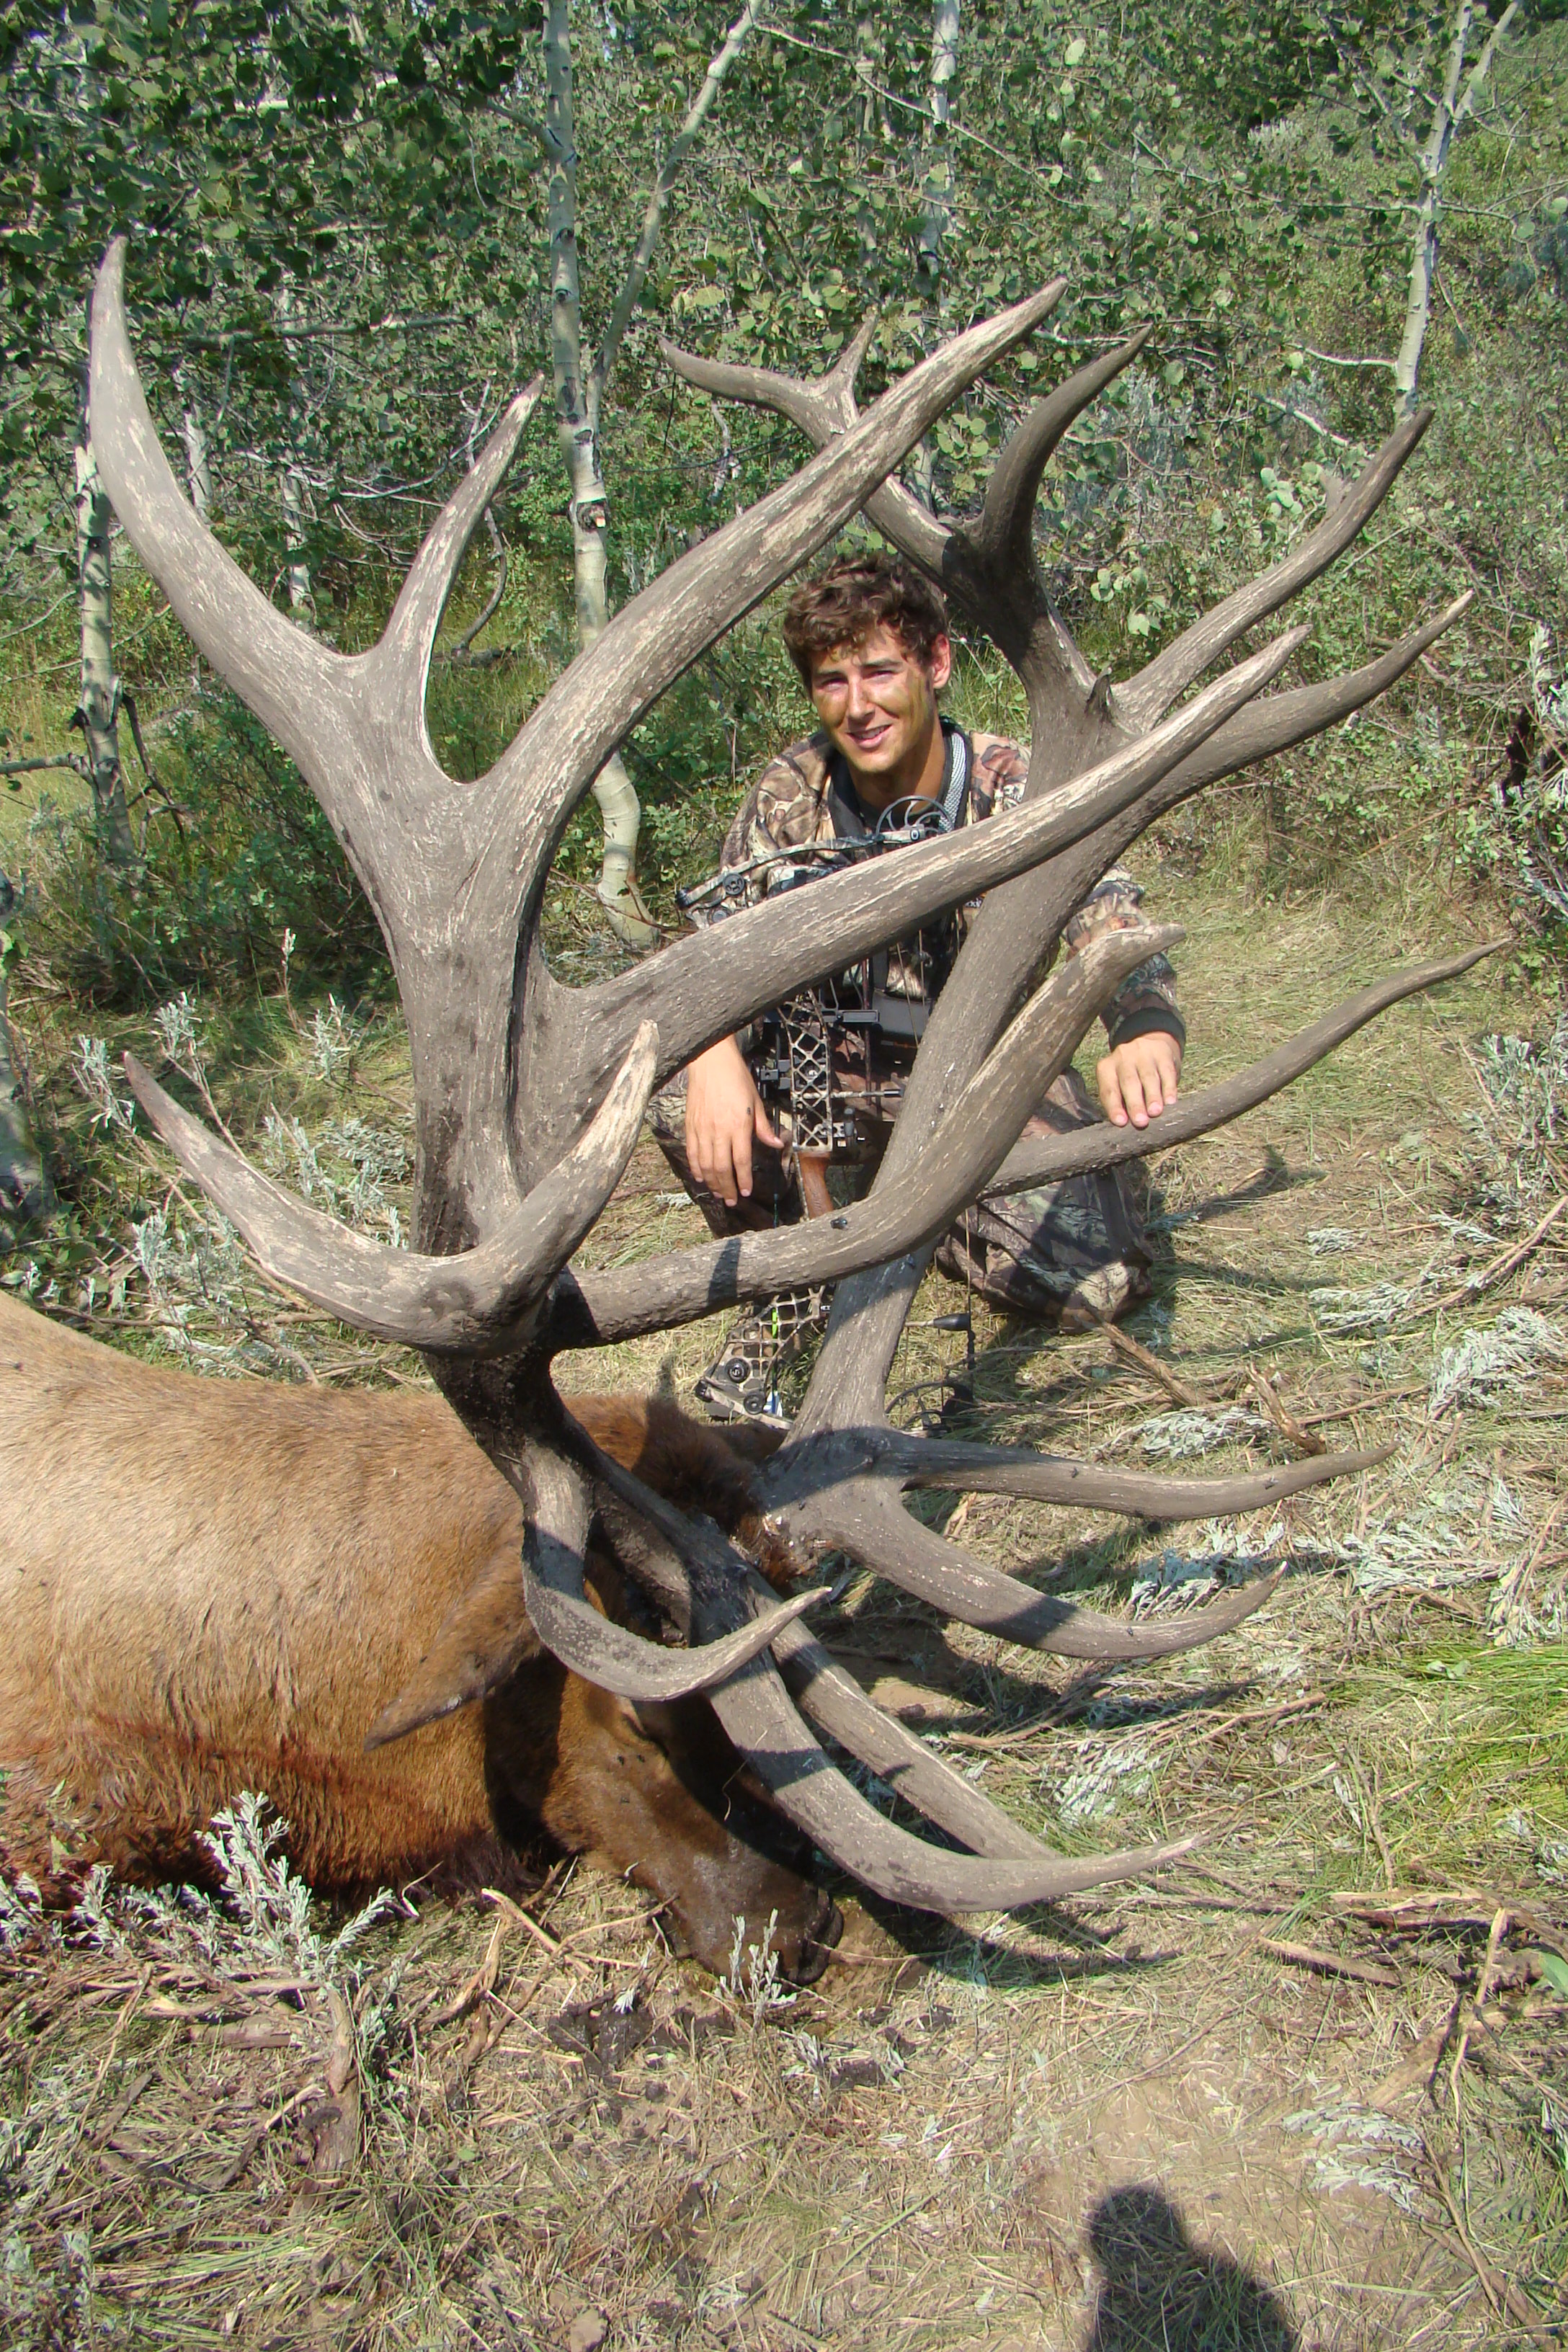 Michael Rutland with this giant 566" World Record Archery Bull Elk tak...